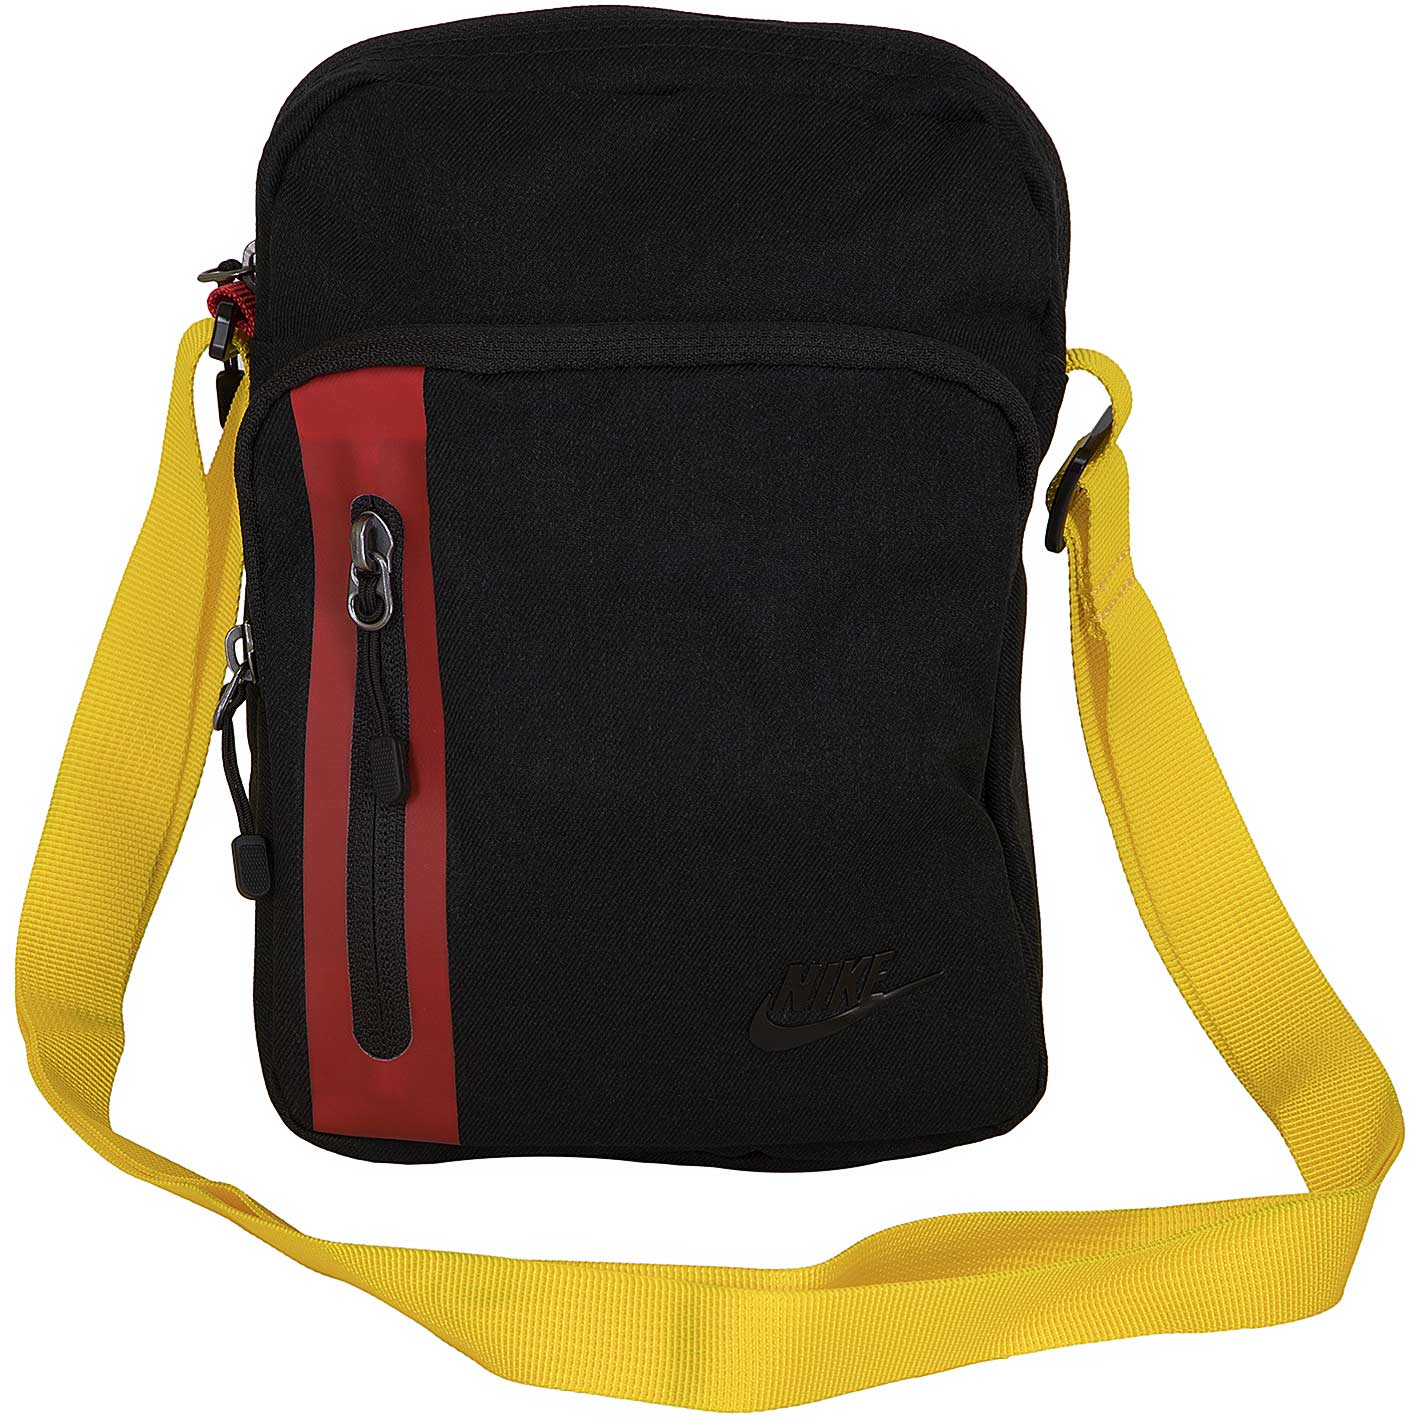 ☆ Nike Mini Tasche Tech Small Items schwarz/rot/gelb - hier bestellen!